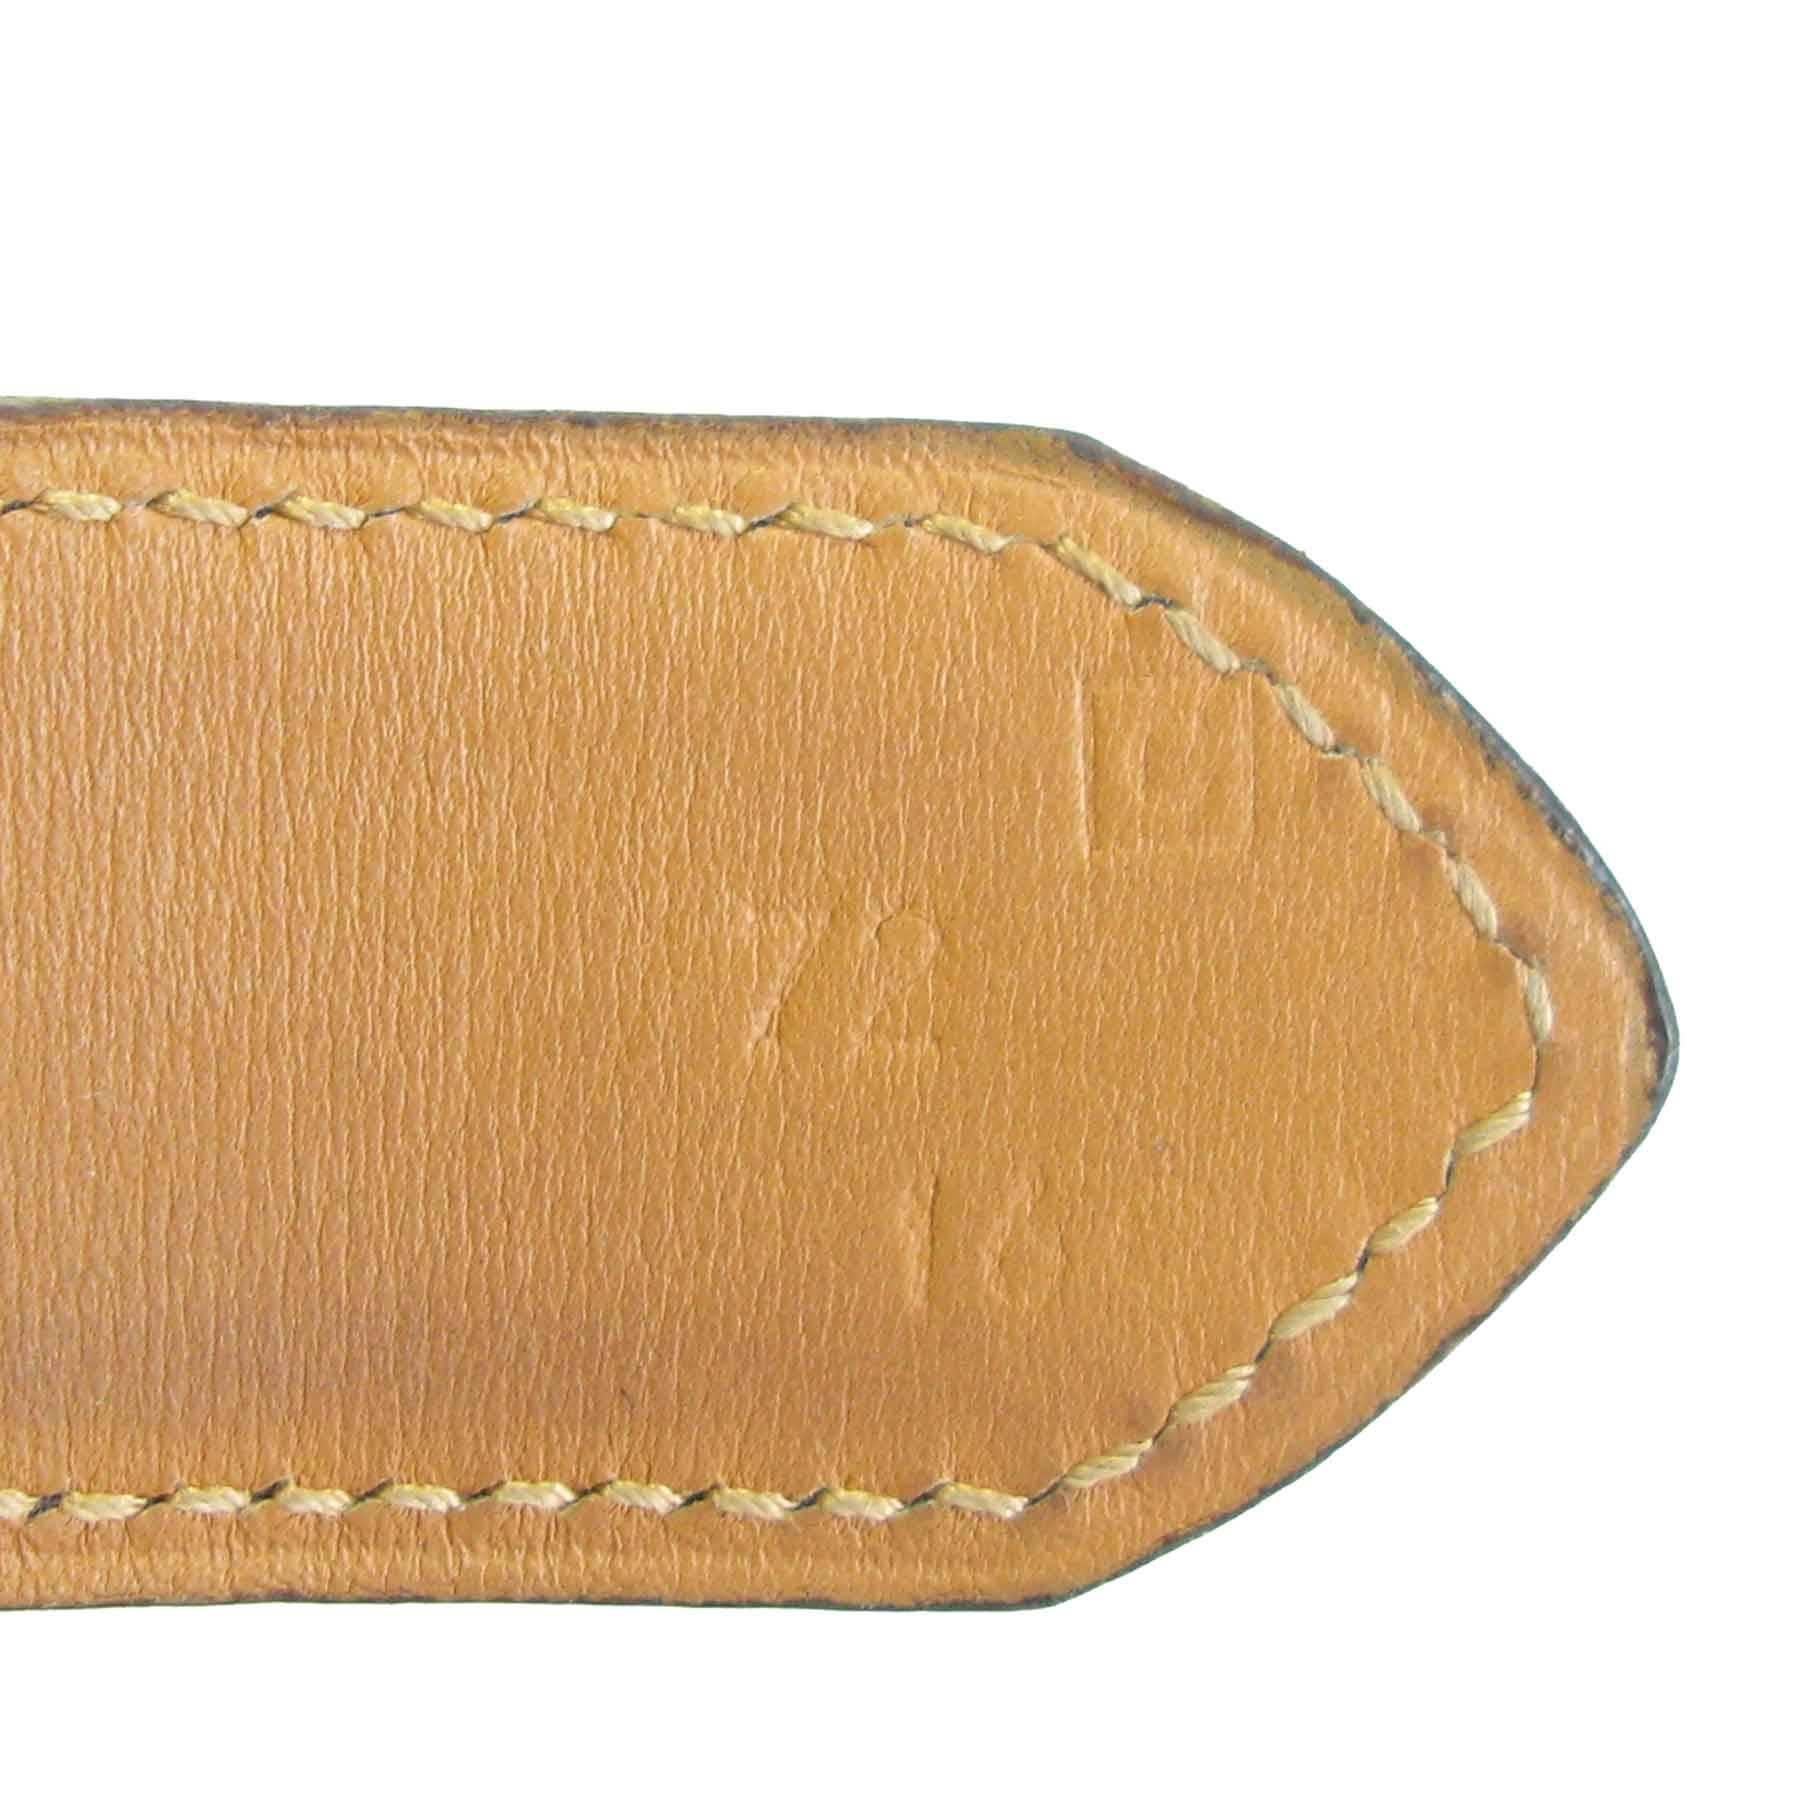 HERMES Navy Blue Leather Belt with Horseshoe Buckle Size 72 FR 1